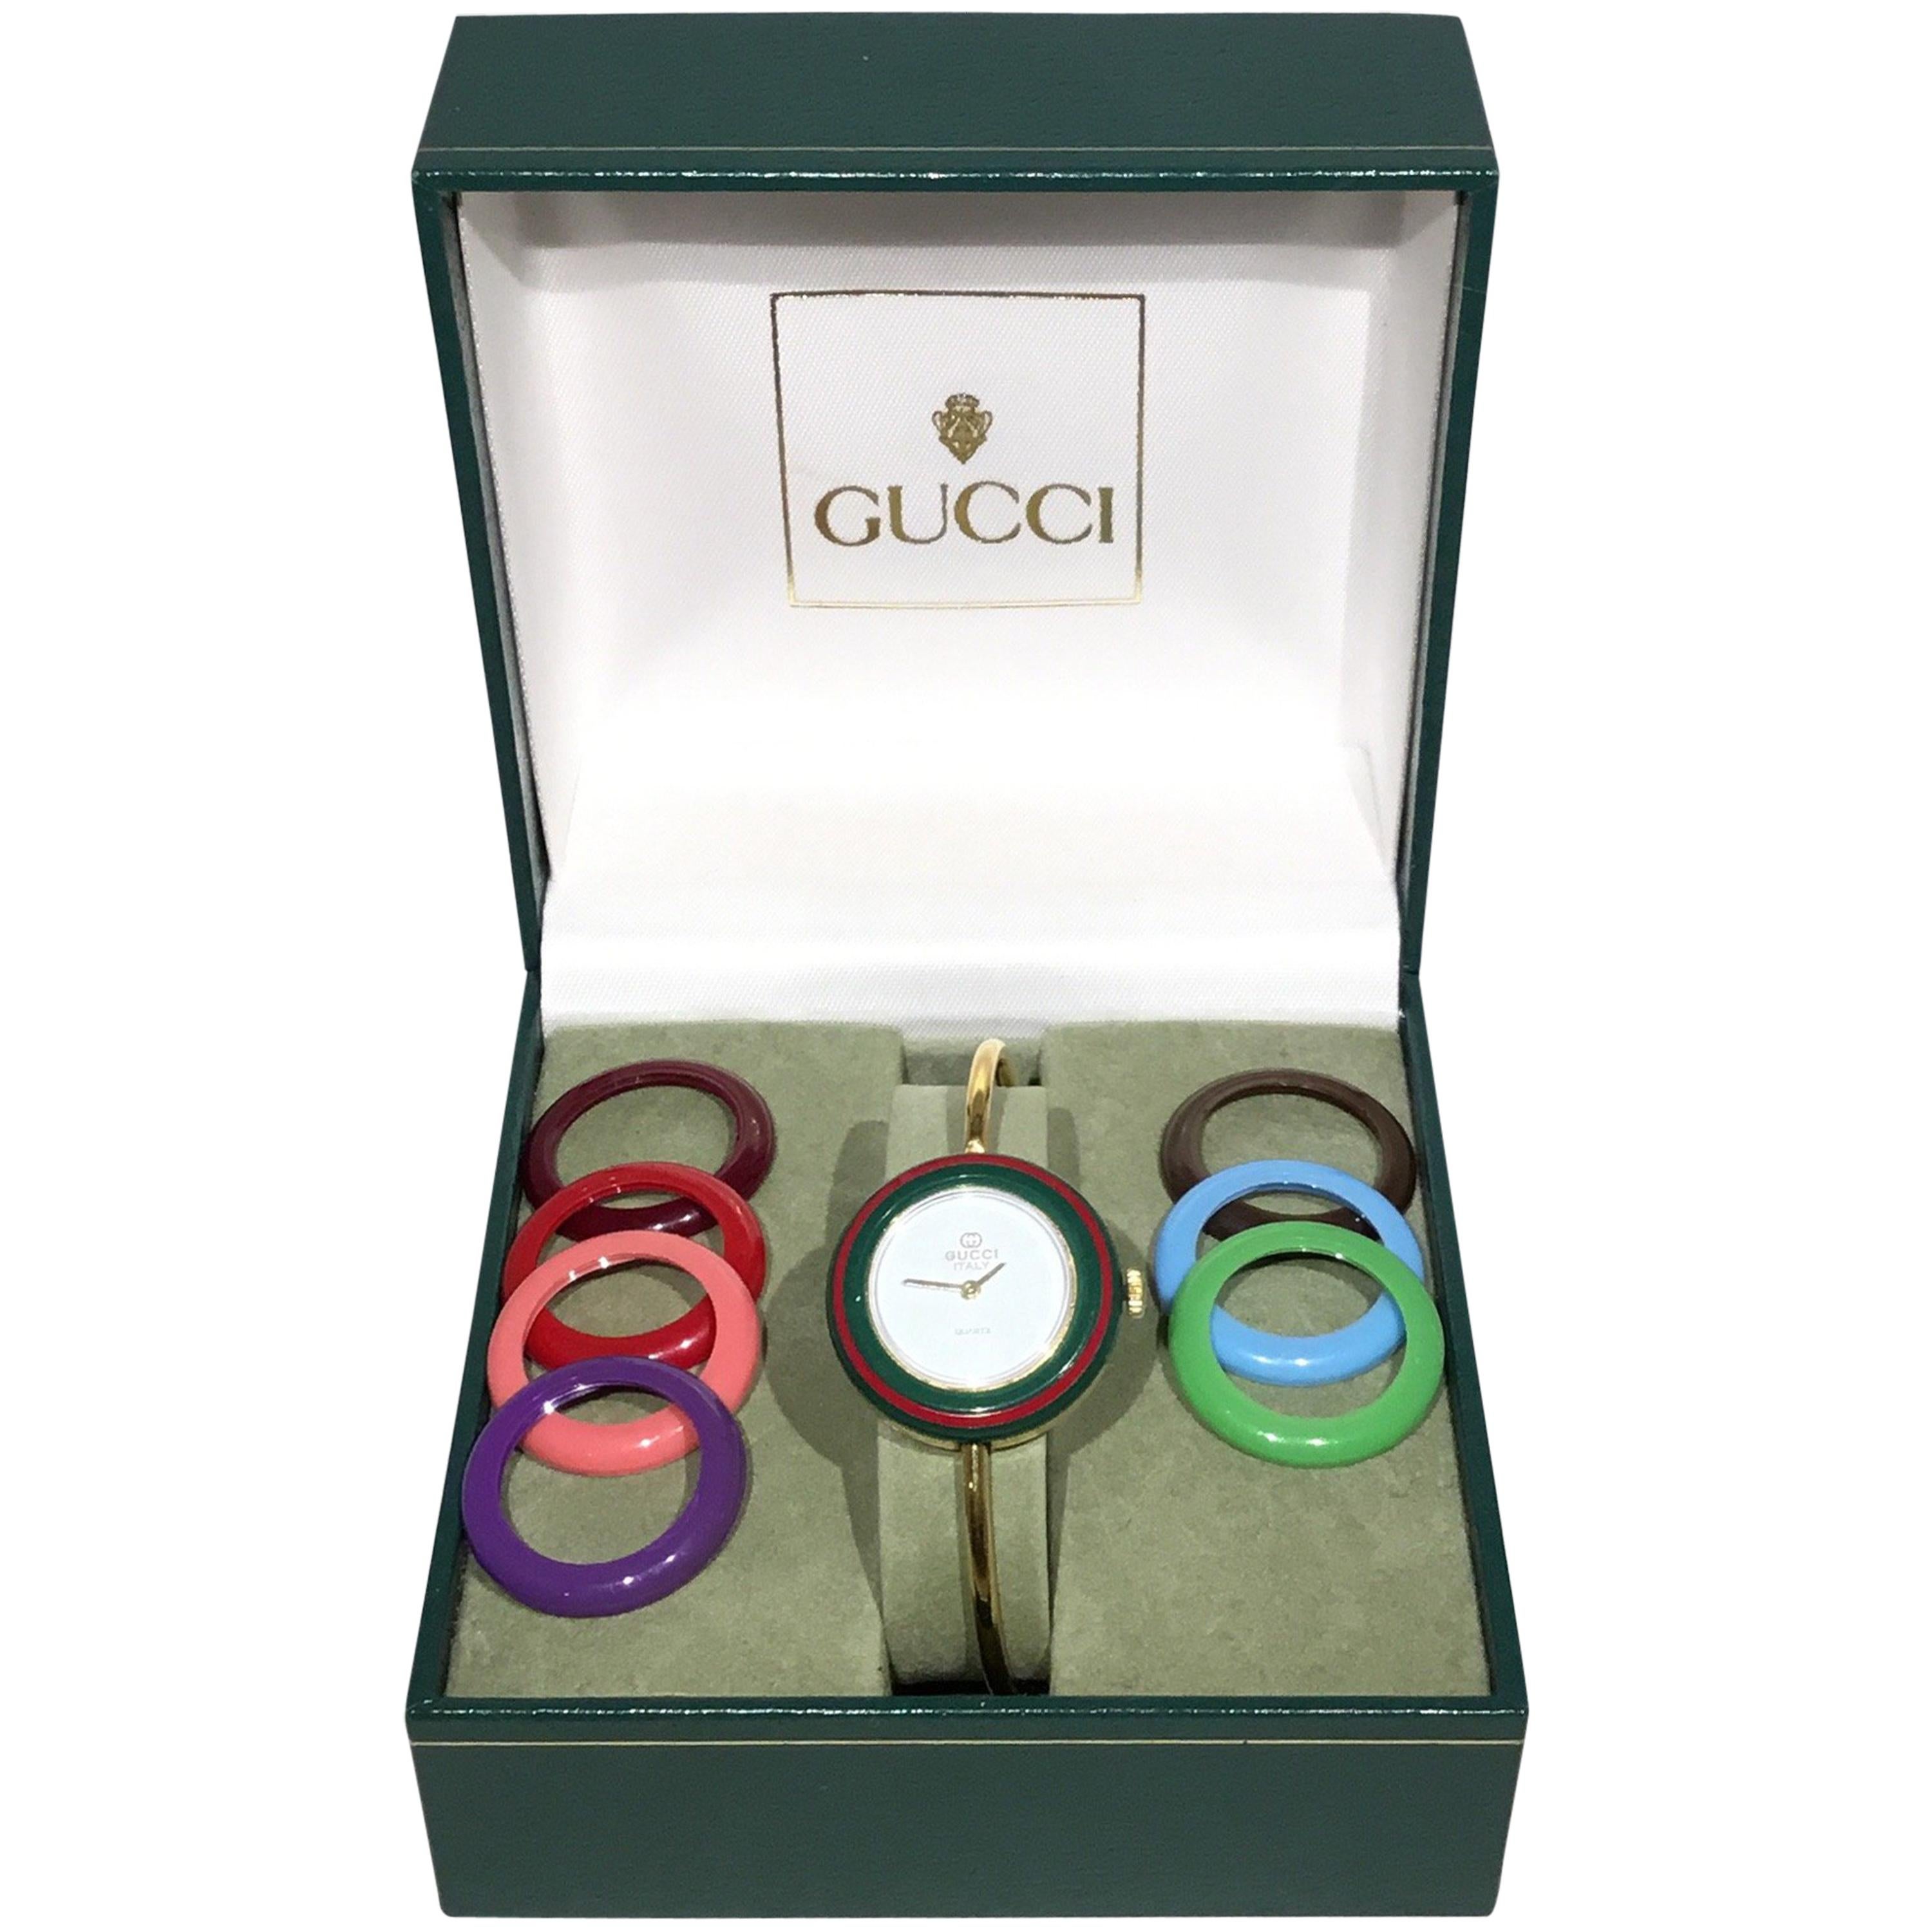 Gucci Interchangeable Bezel Watch Clearance, 59% OFF 